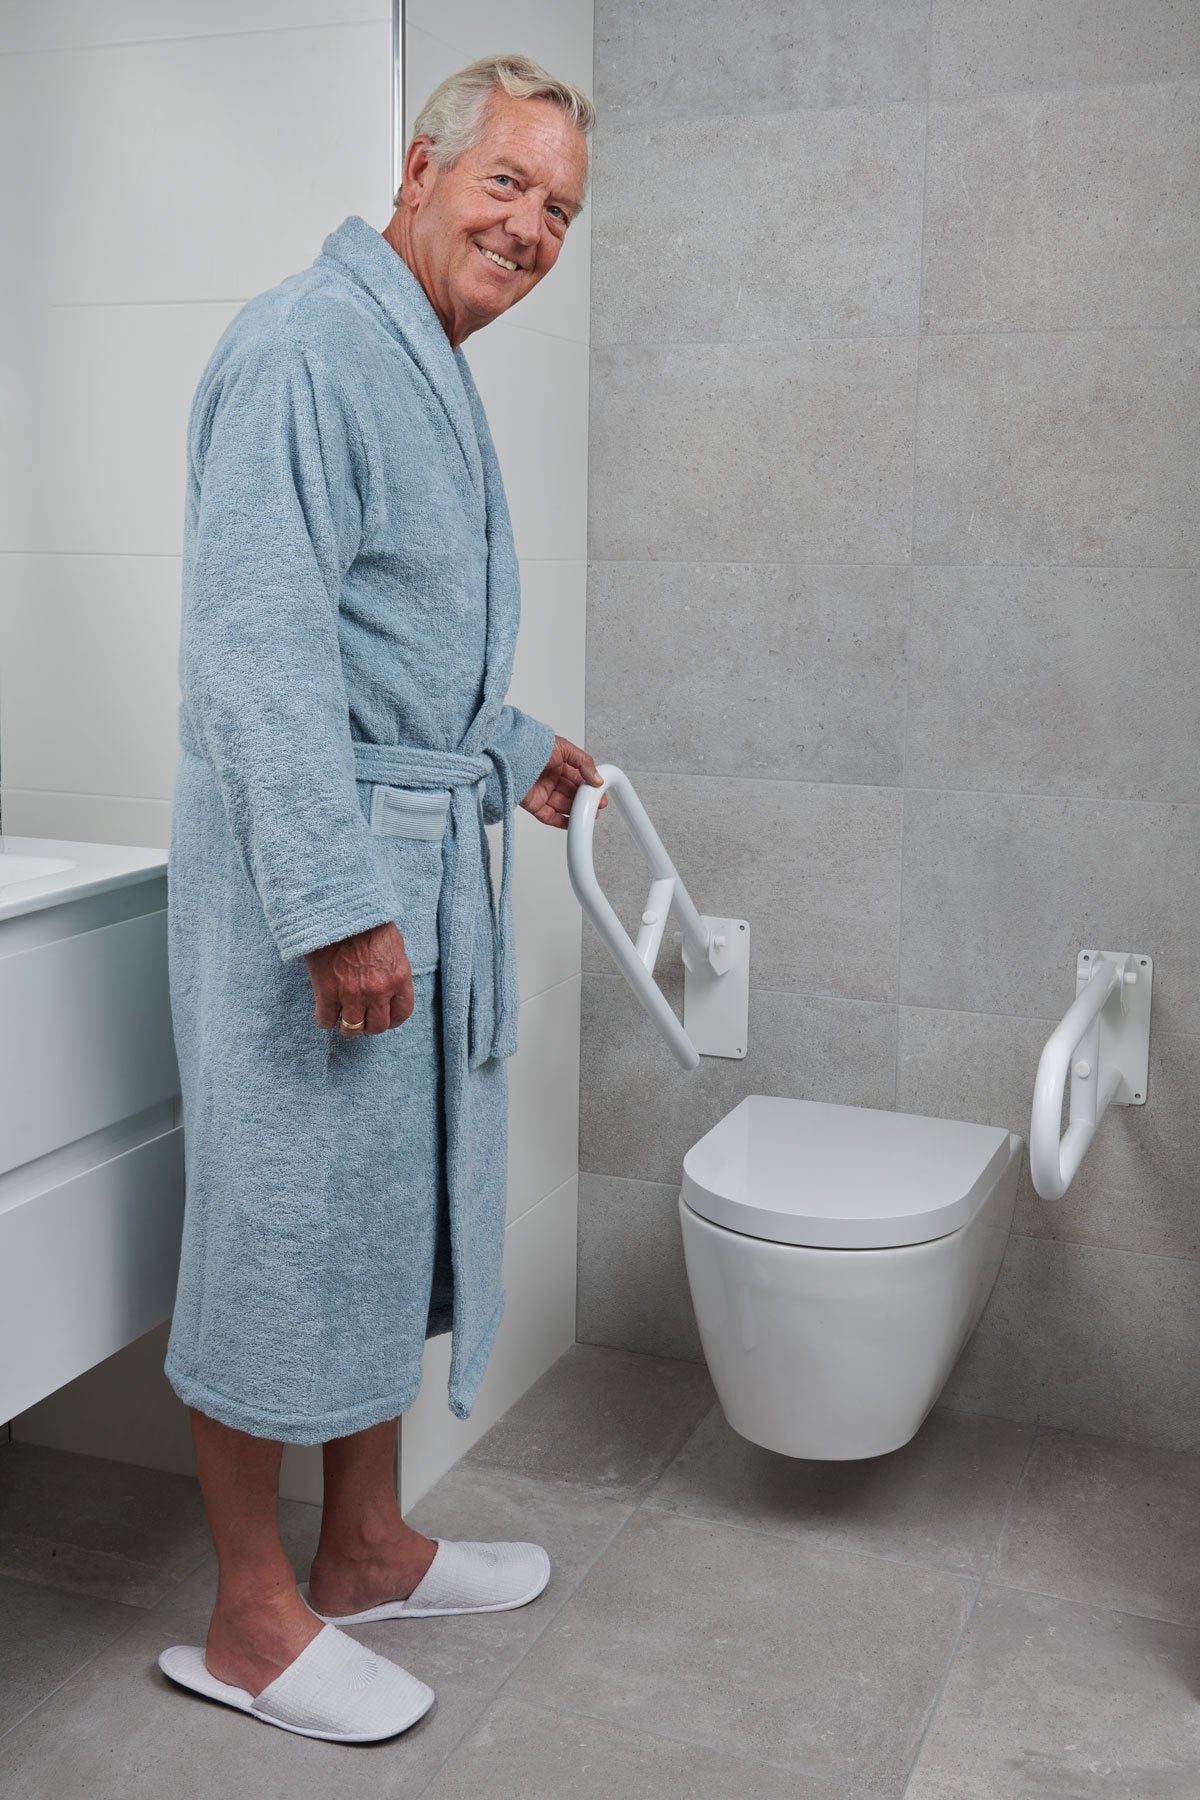 SecuCare Toilet bar foldable